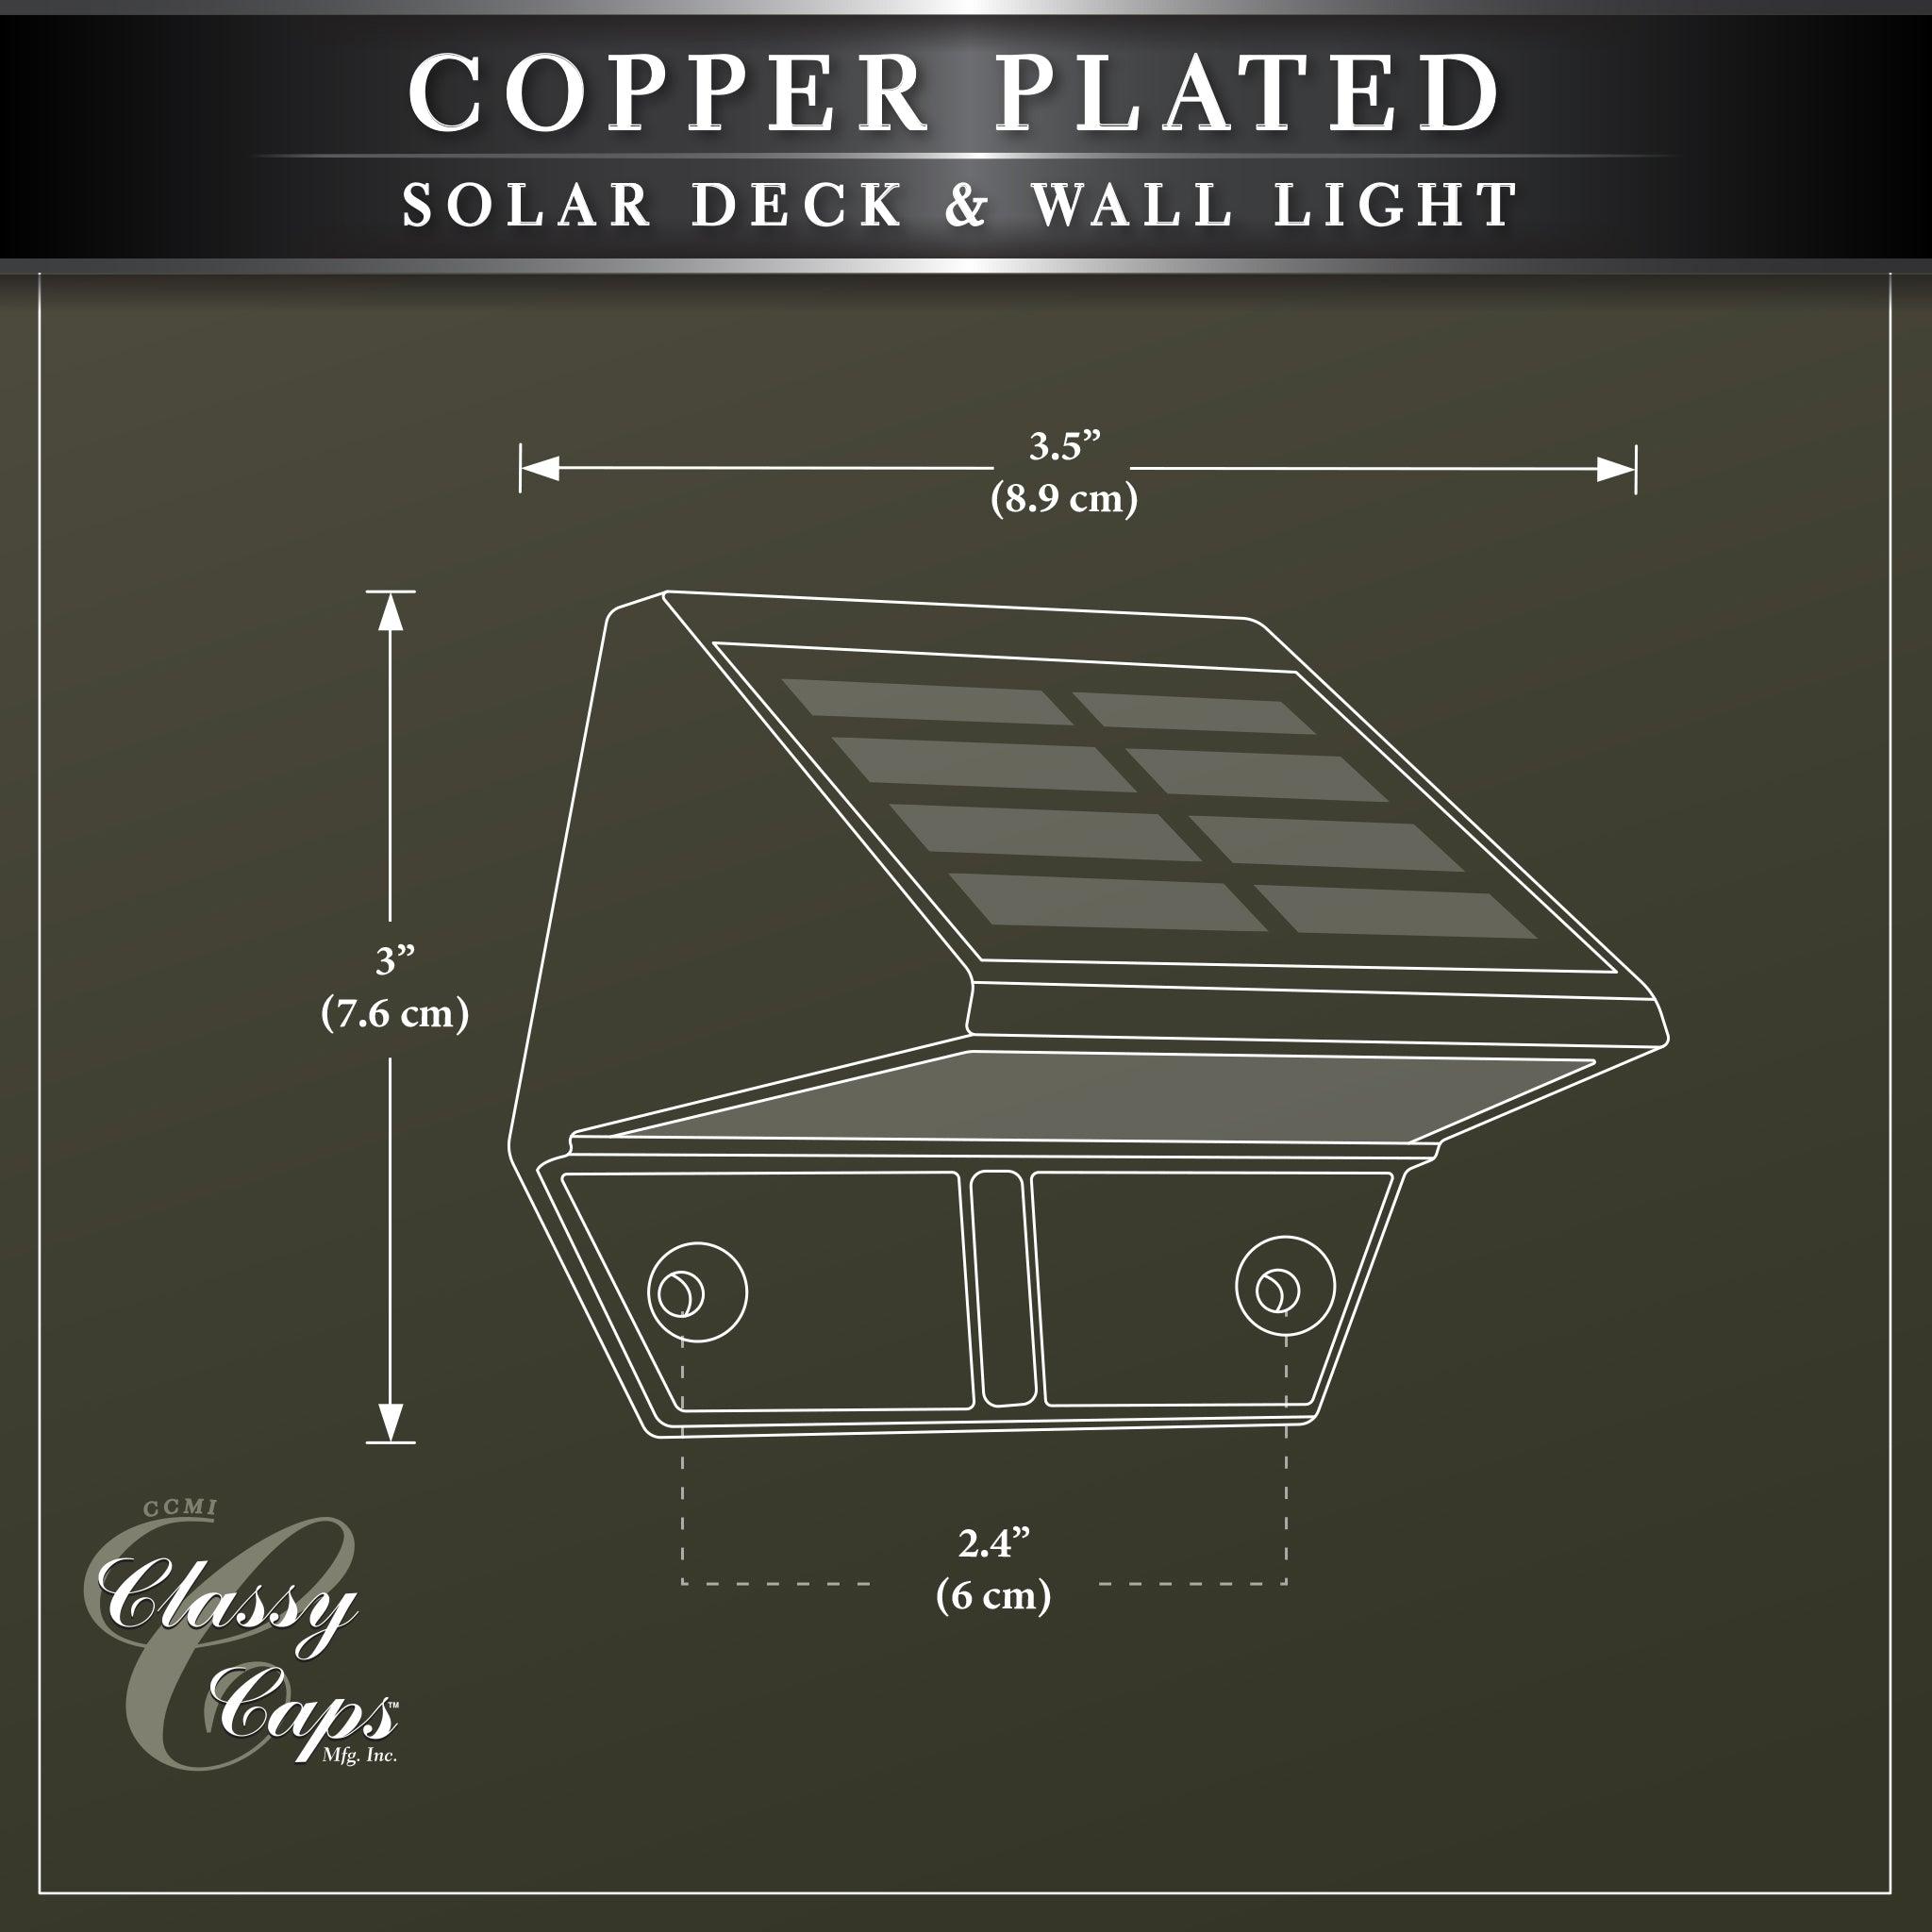 Copper Plated Deck & Wall Light - Classy Caps Mfg. Inc.